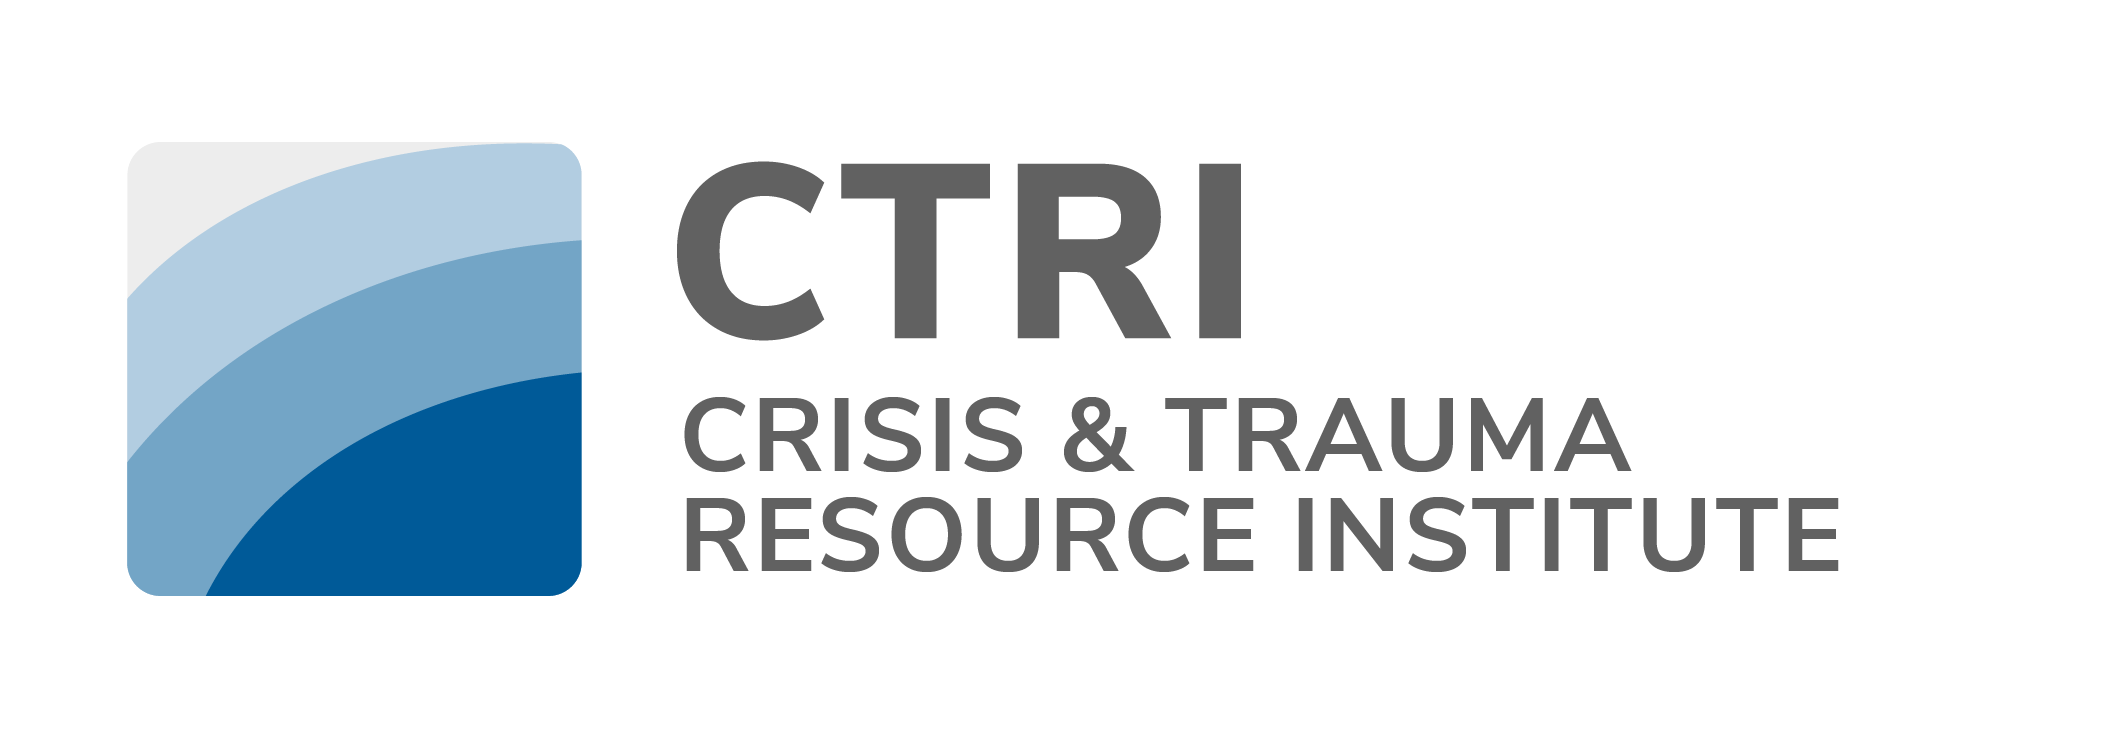 CTRI - Crisis & Trauma Resource Institute